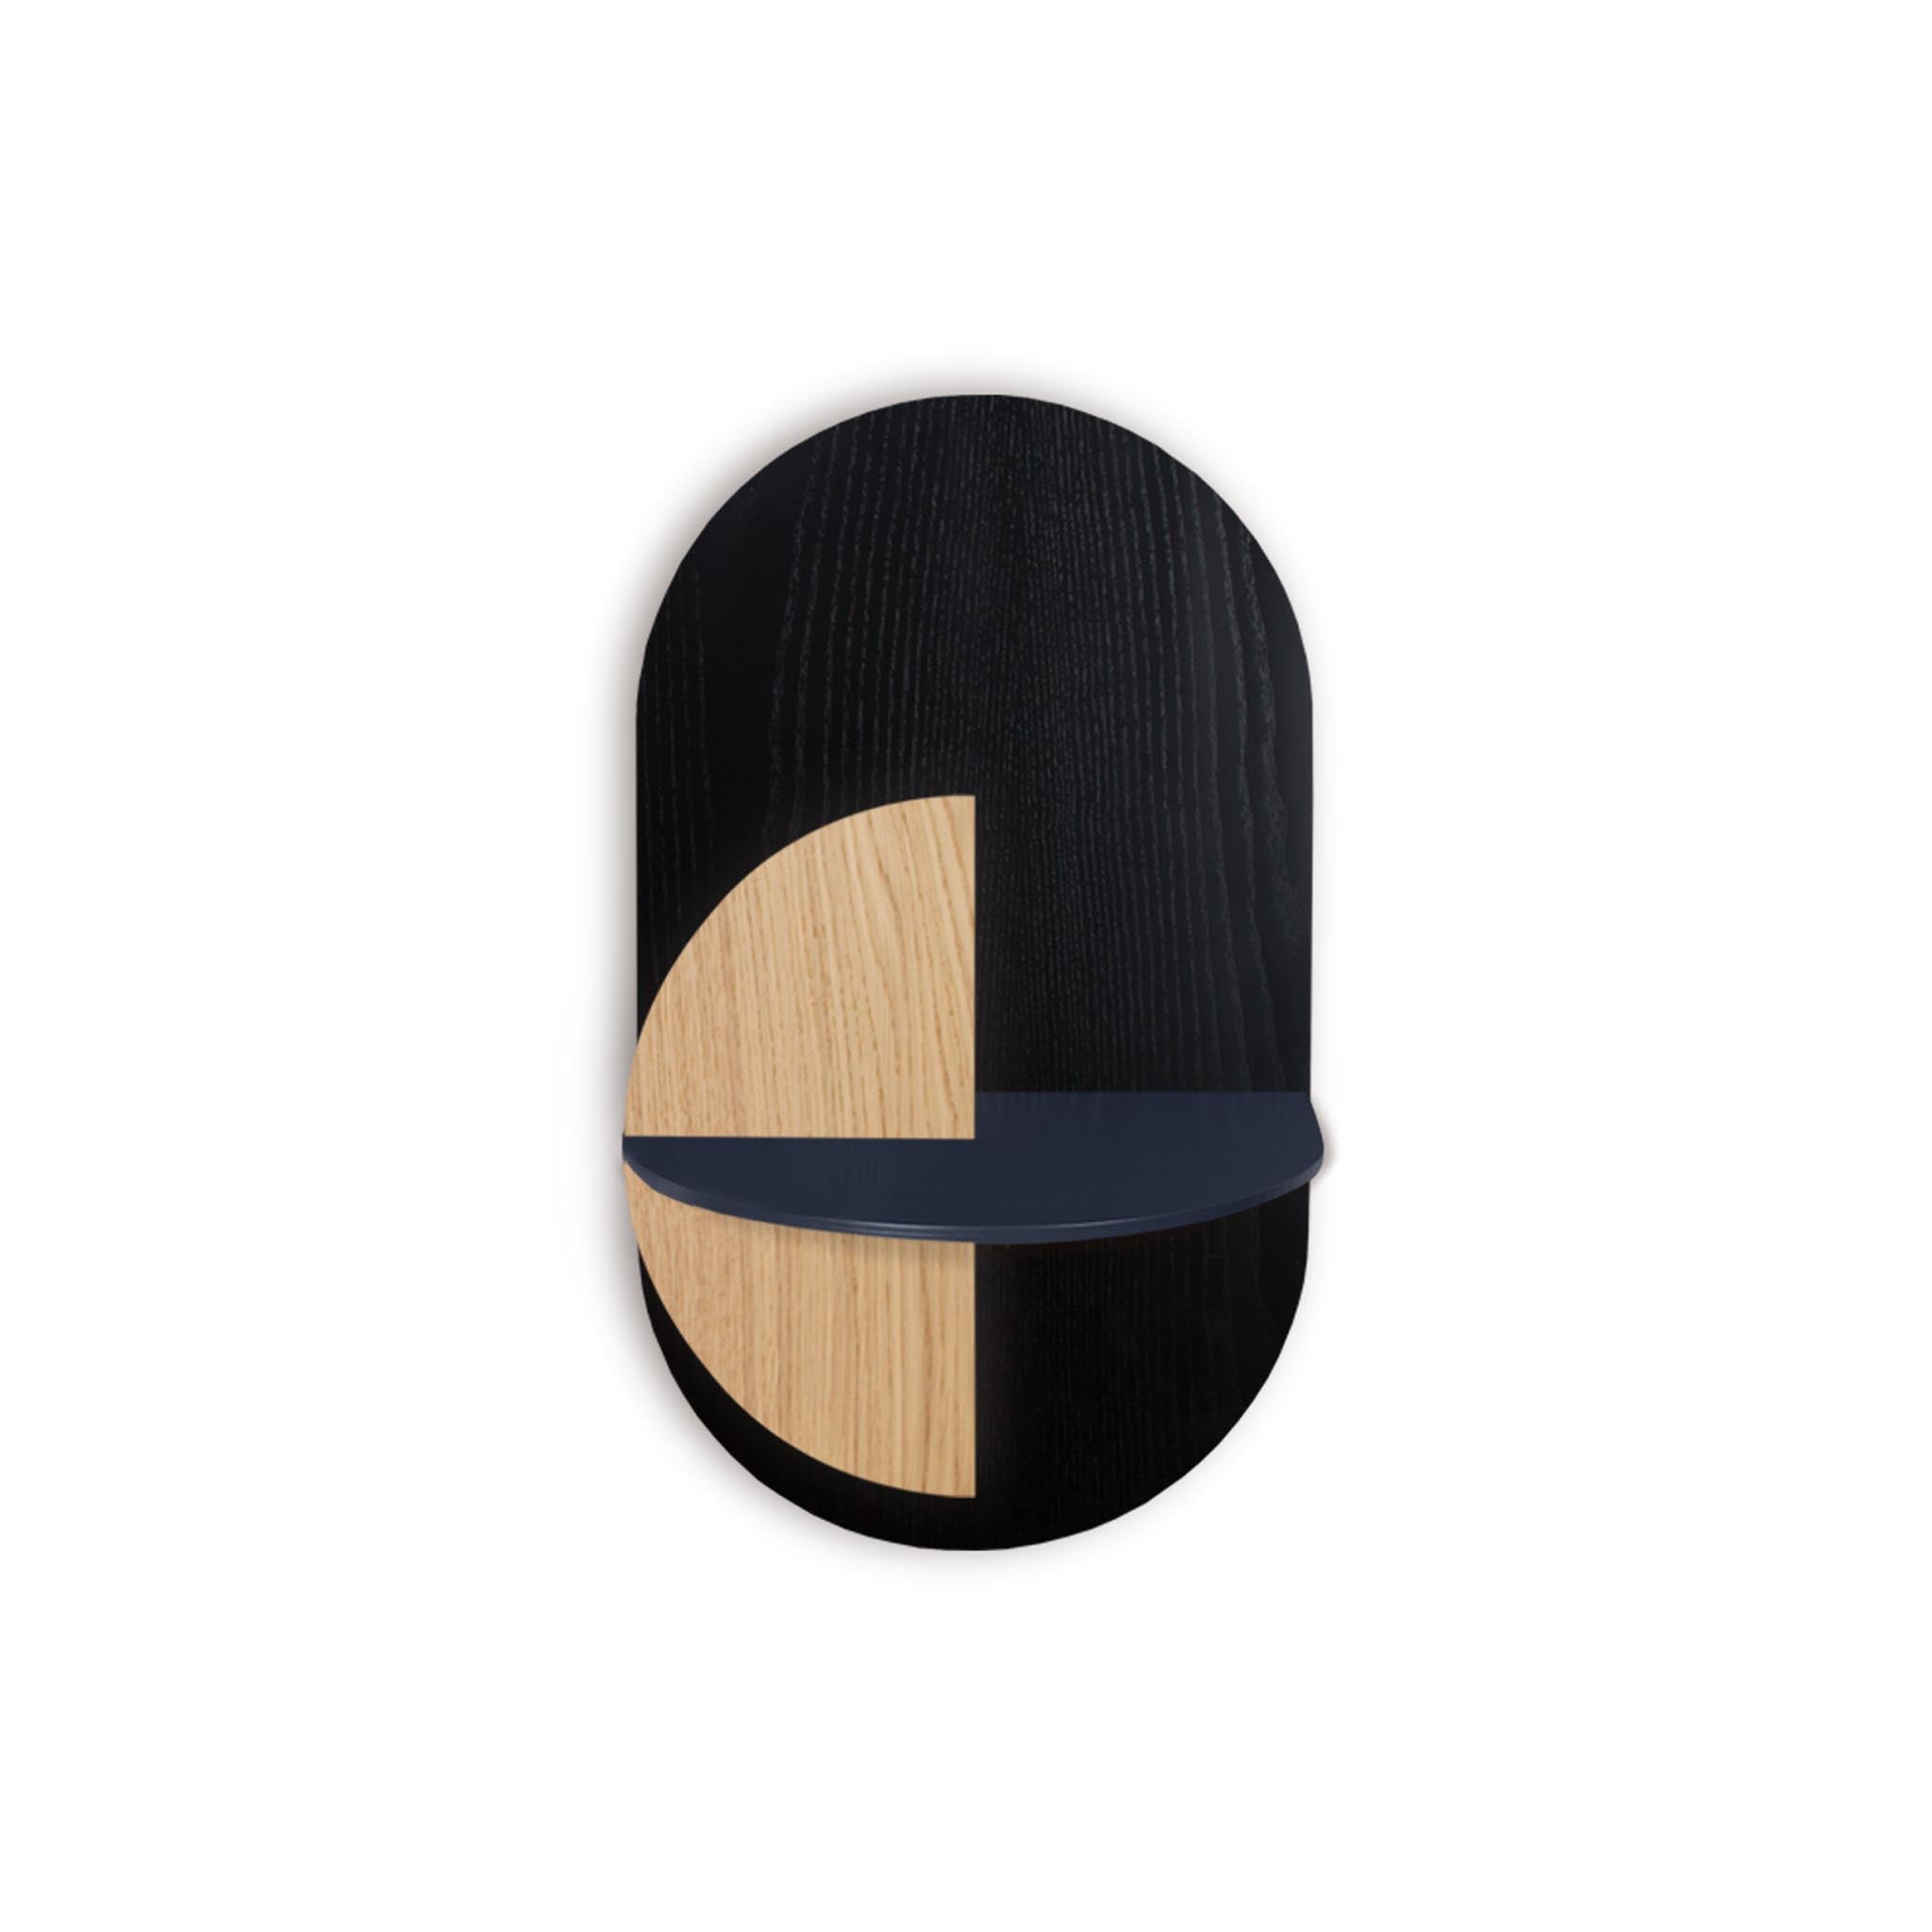 Alba slim floating nightstand · Black oval